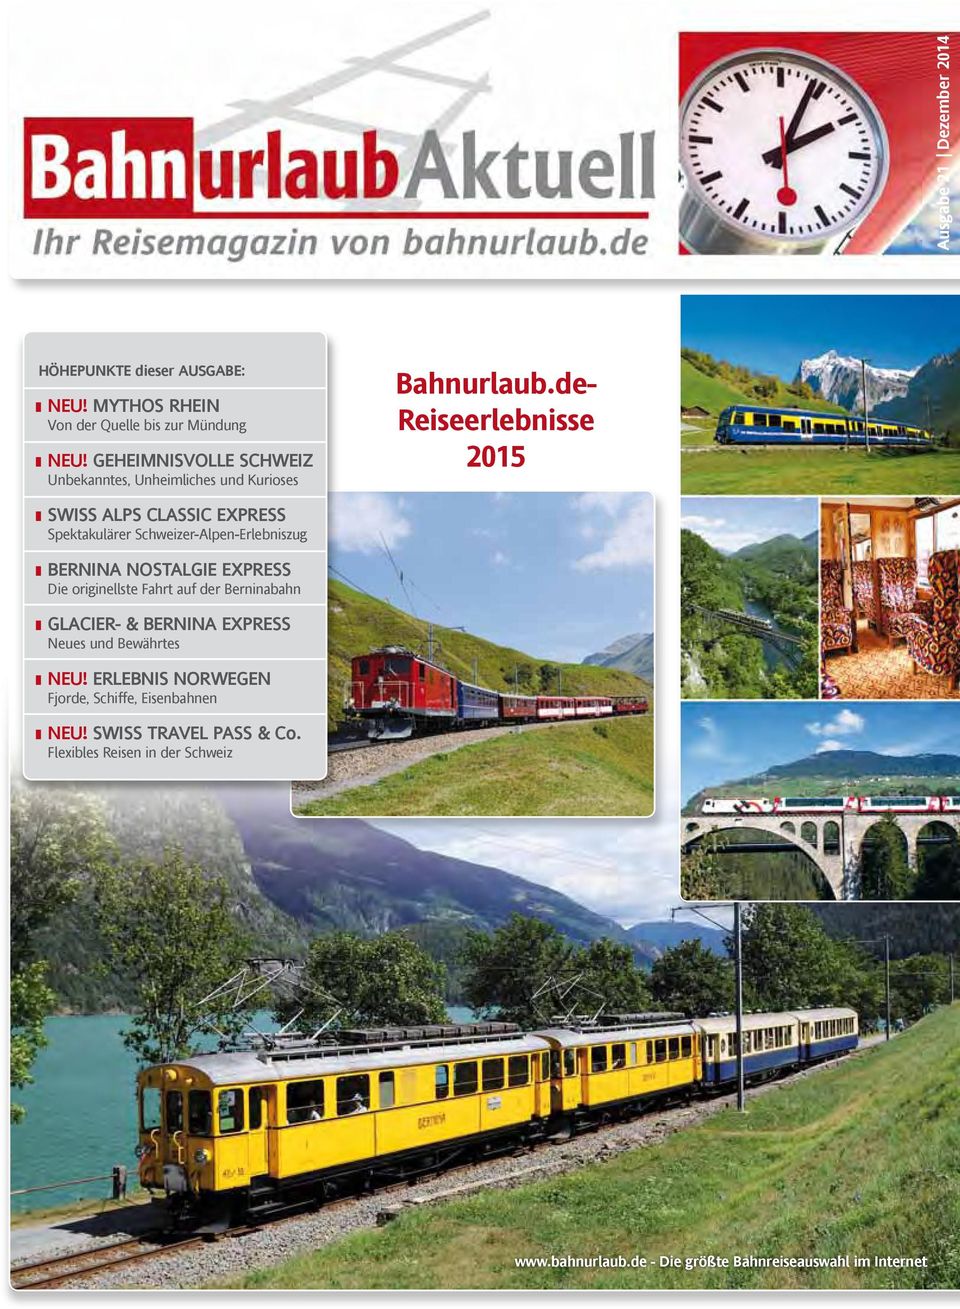 de- Reiseerlebnisse 2015 SWISS ALPS CLASSIC EXPRESS Spektakulärer Schweizer-Alpen-Erlebniszug BERNINA NOSTALGIE EXPRESS Die originellste